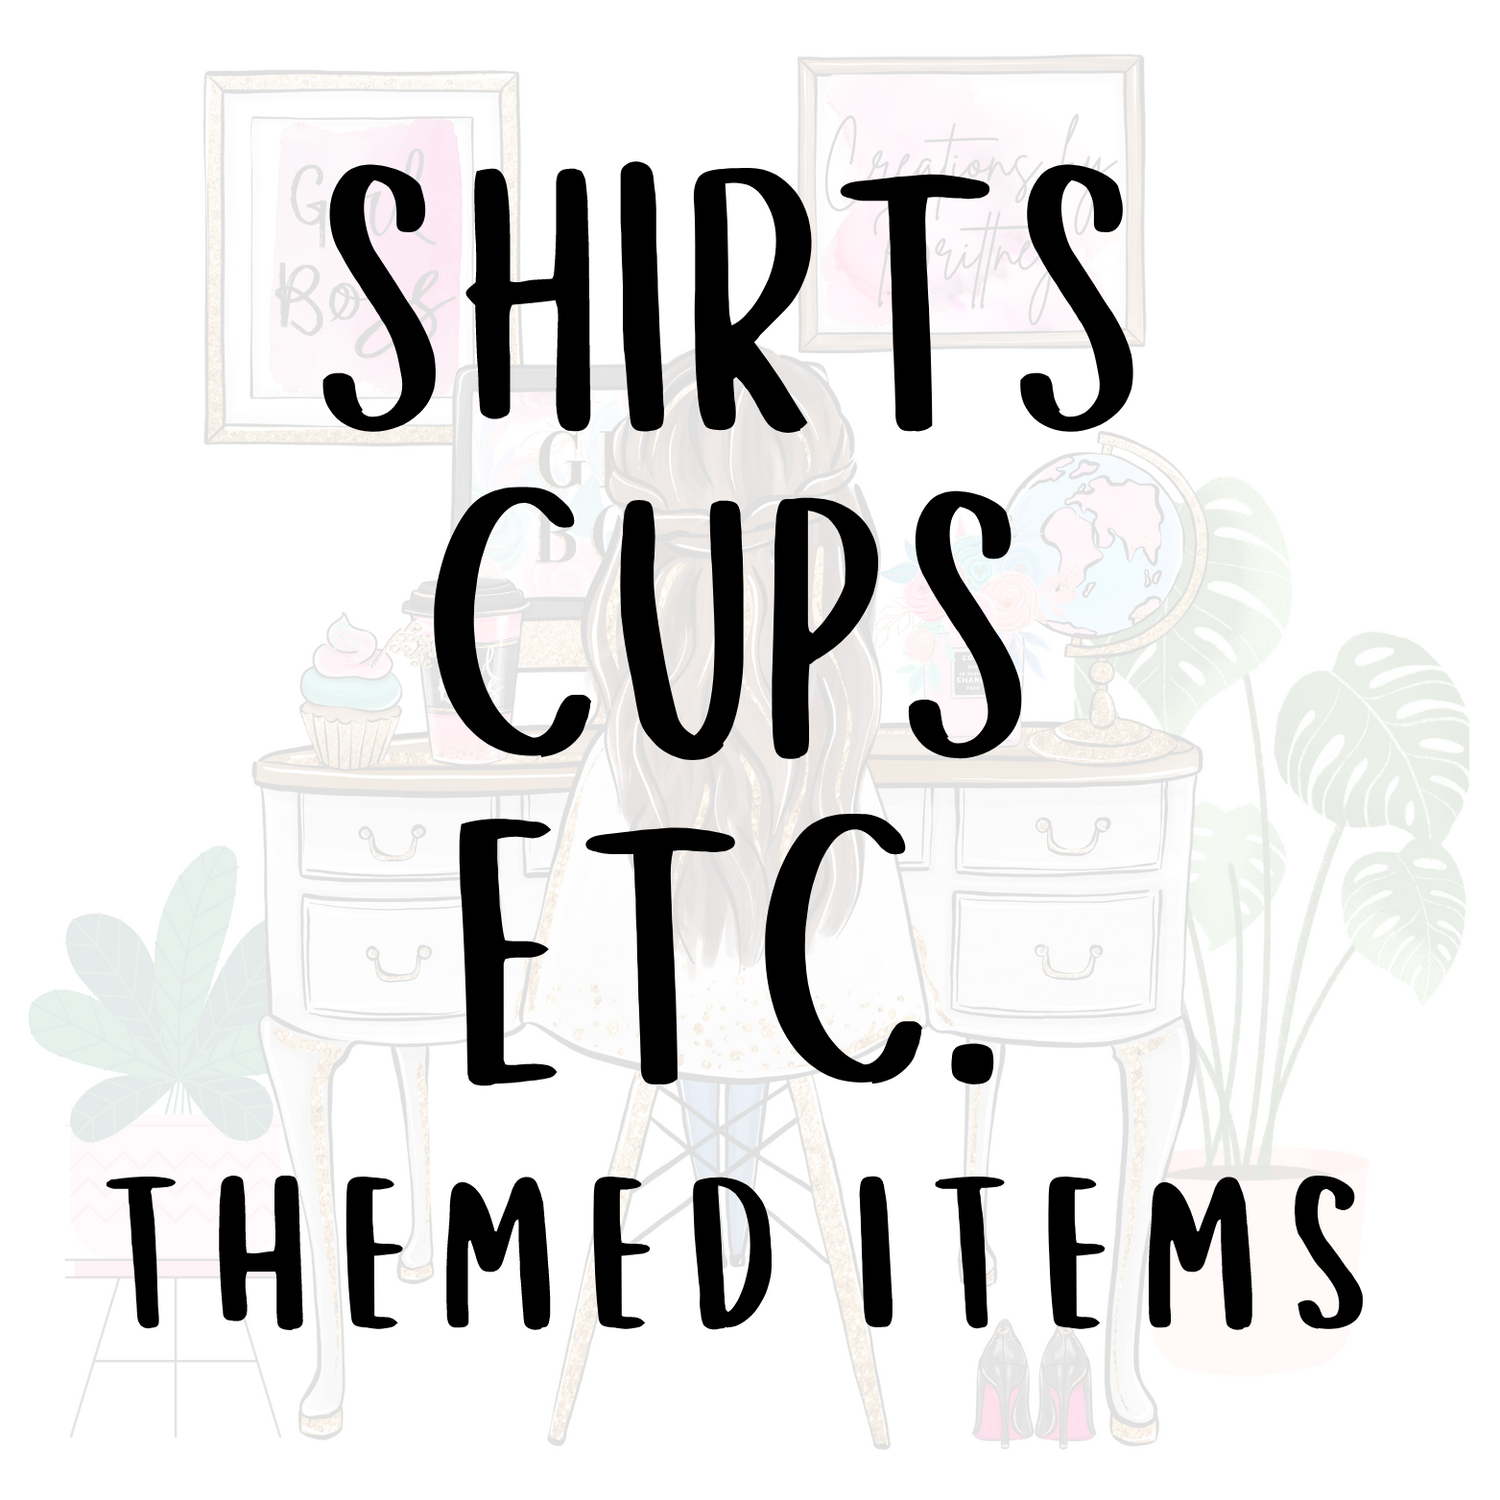 Shirts / Cups etc